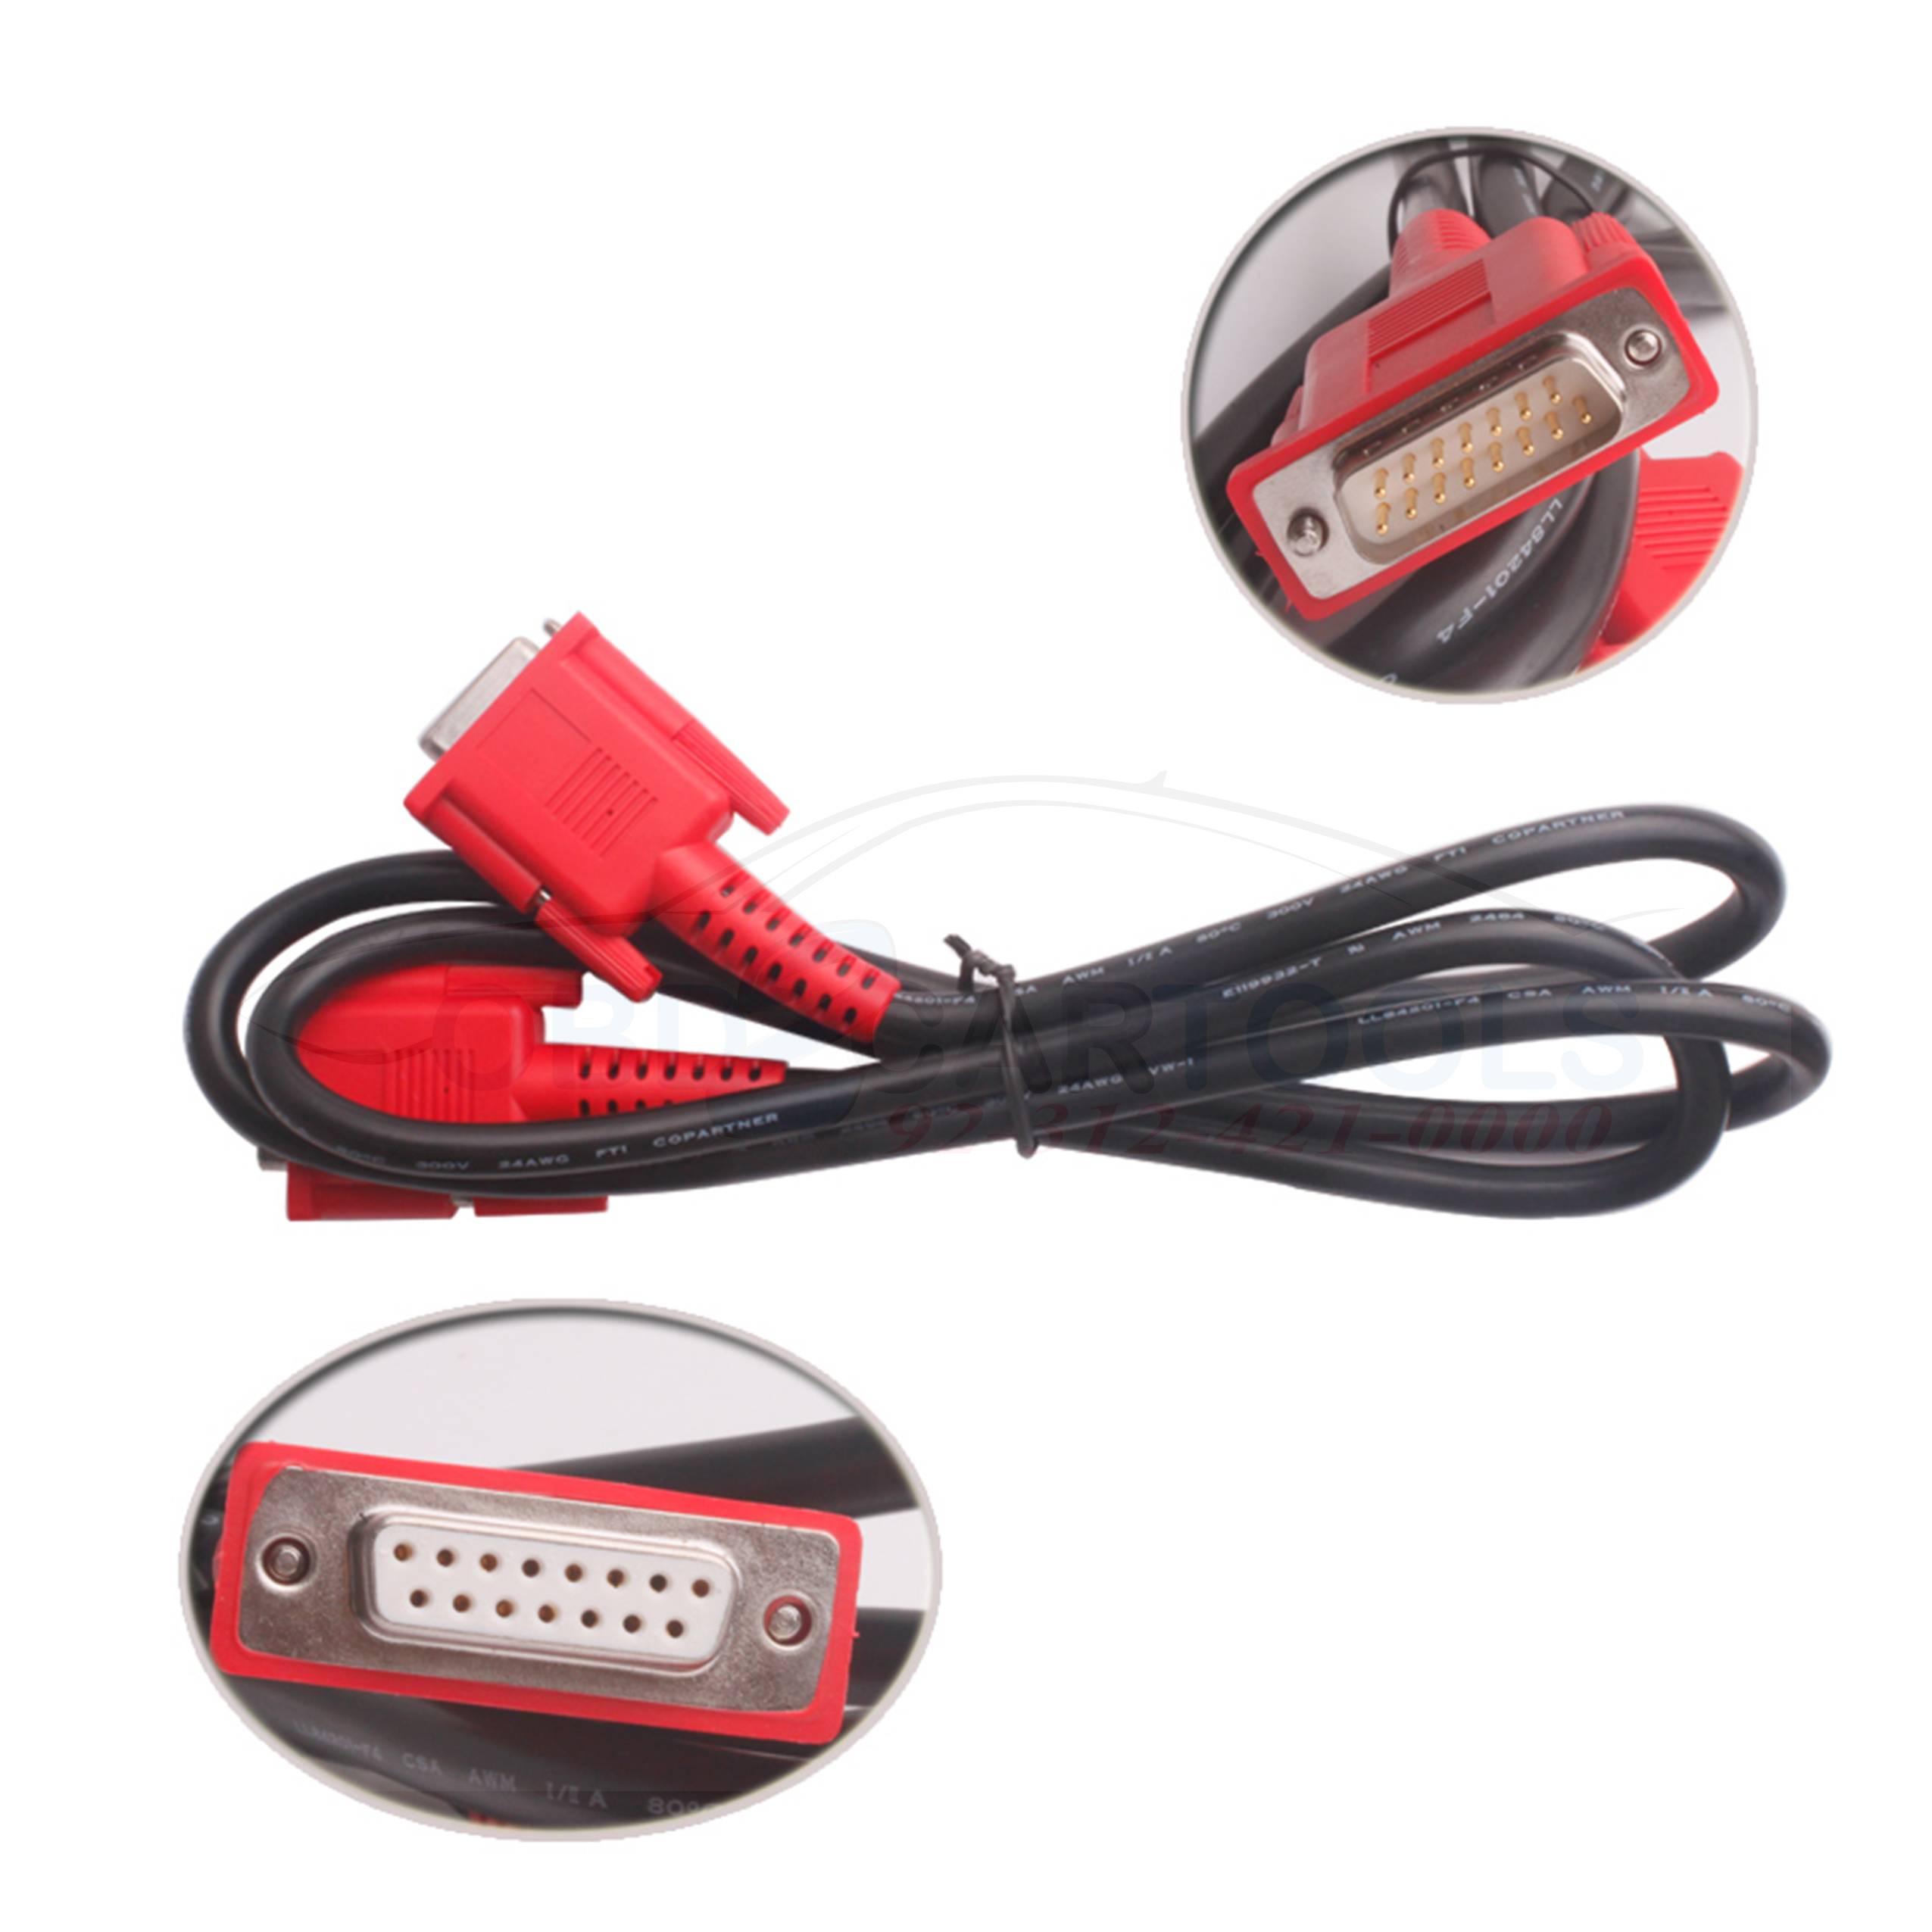 Product image for Autel Maxidas DS708 Main Test Cable for Autel Maxidas